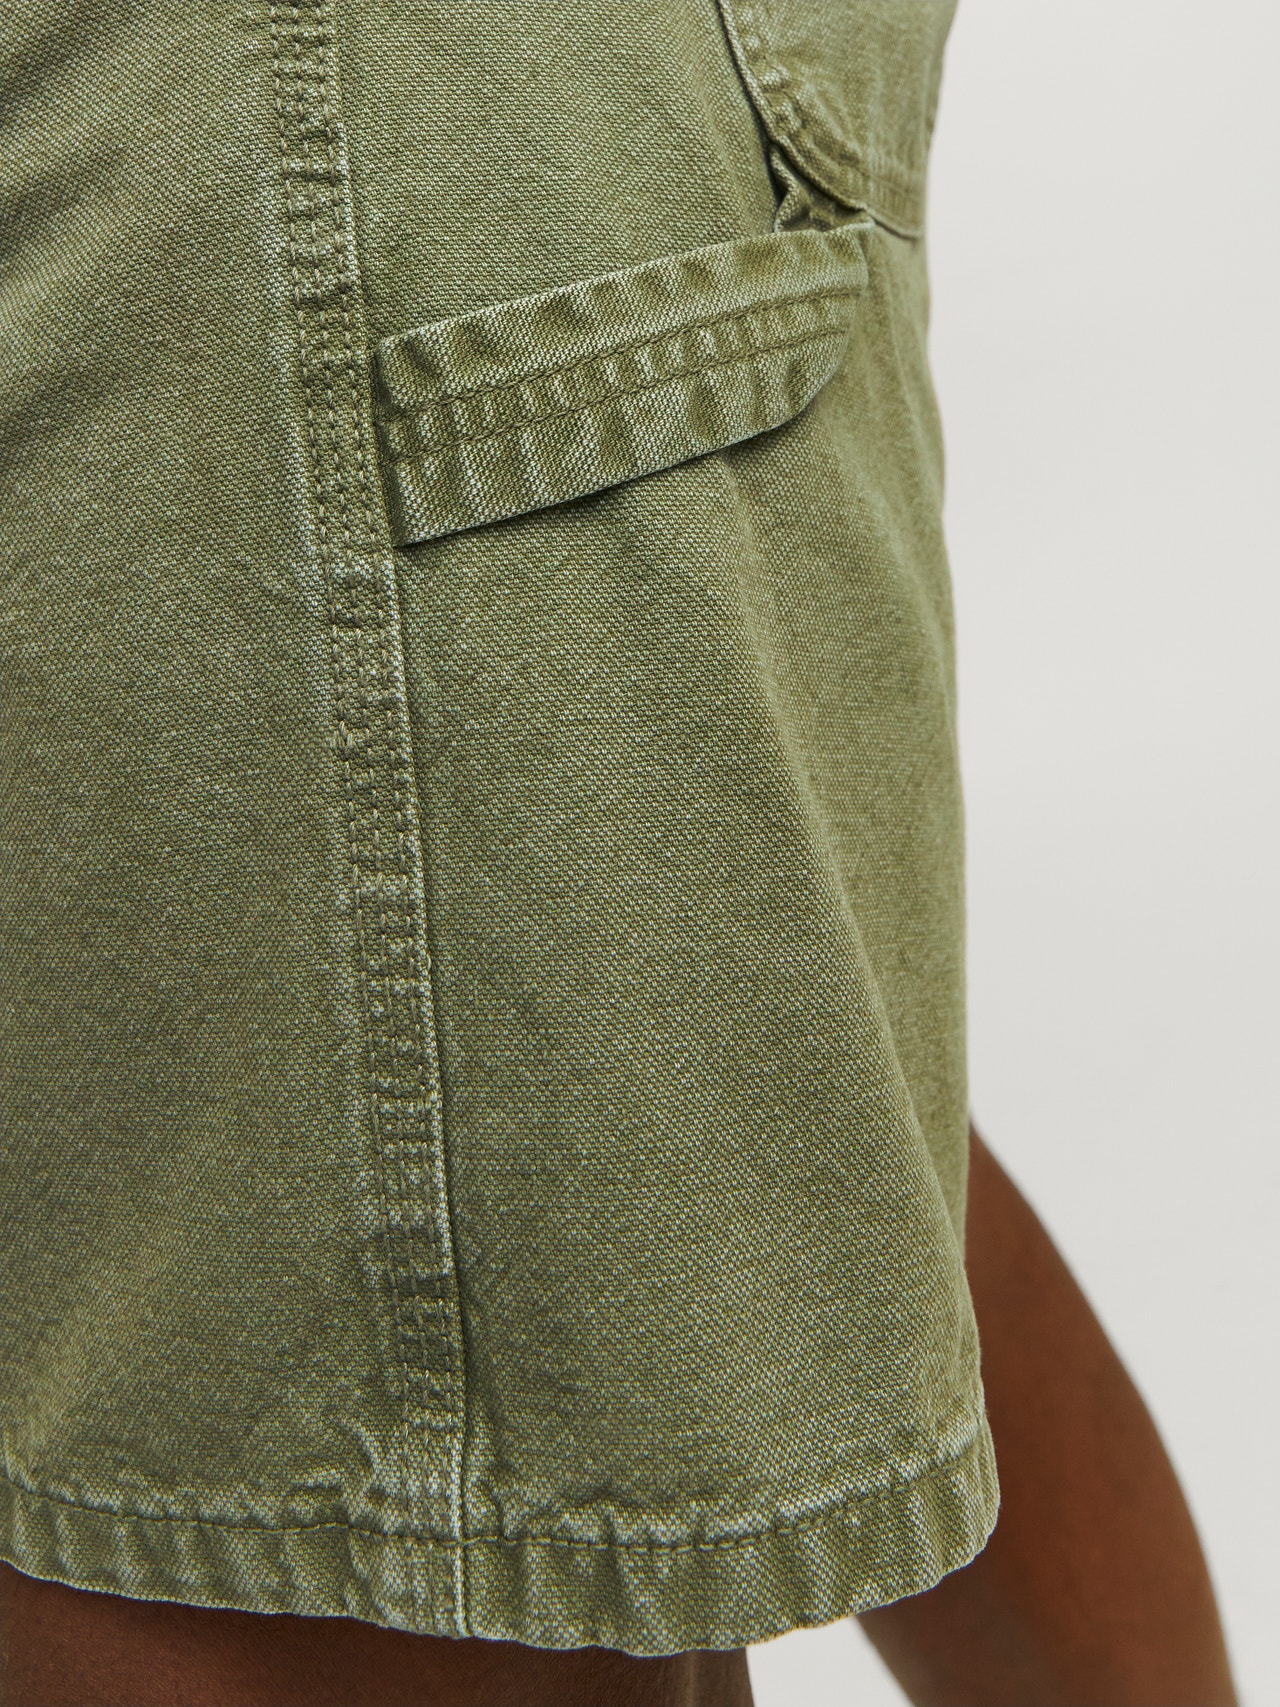 Jack & Jones Loose Fit Jeans Shorts -Deep Lichen Green - 12252814